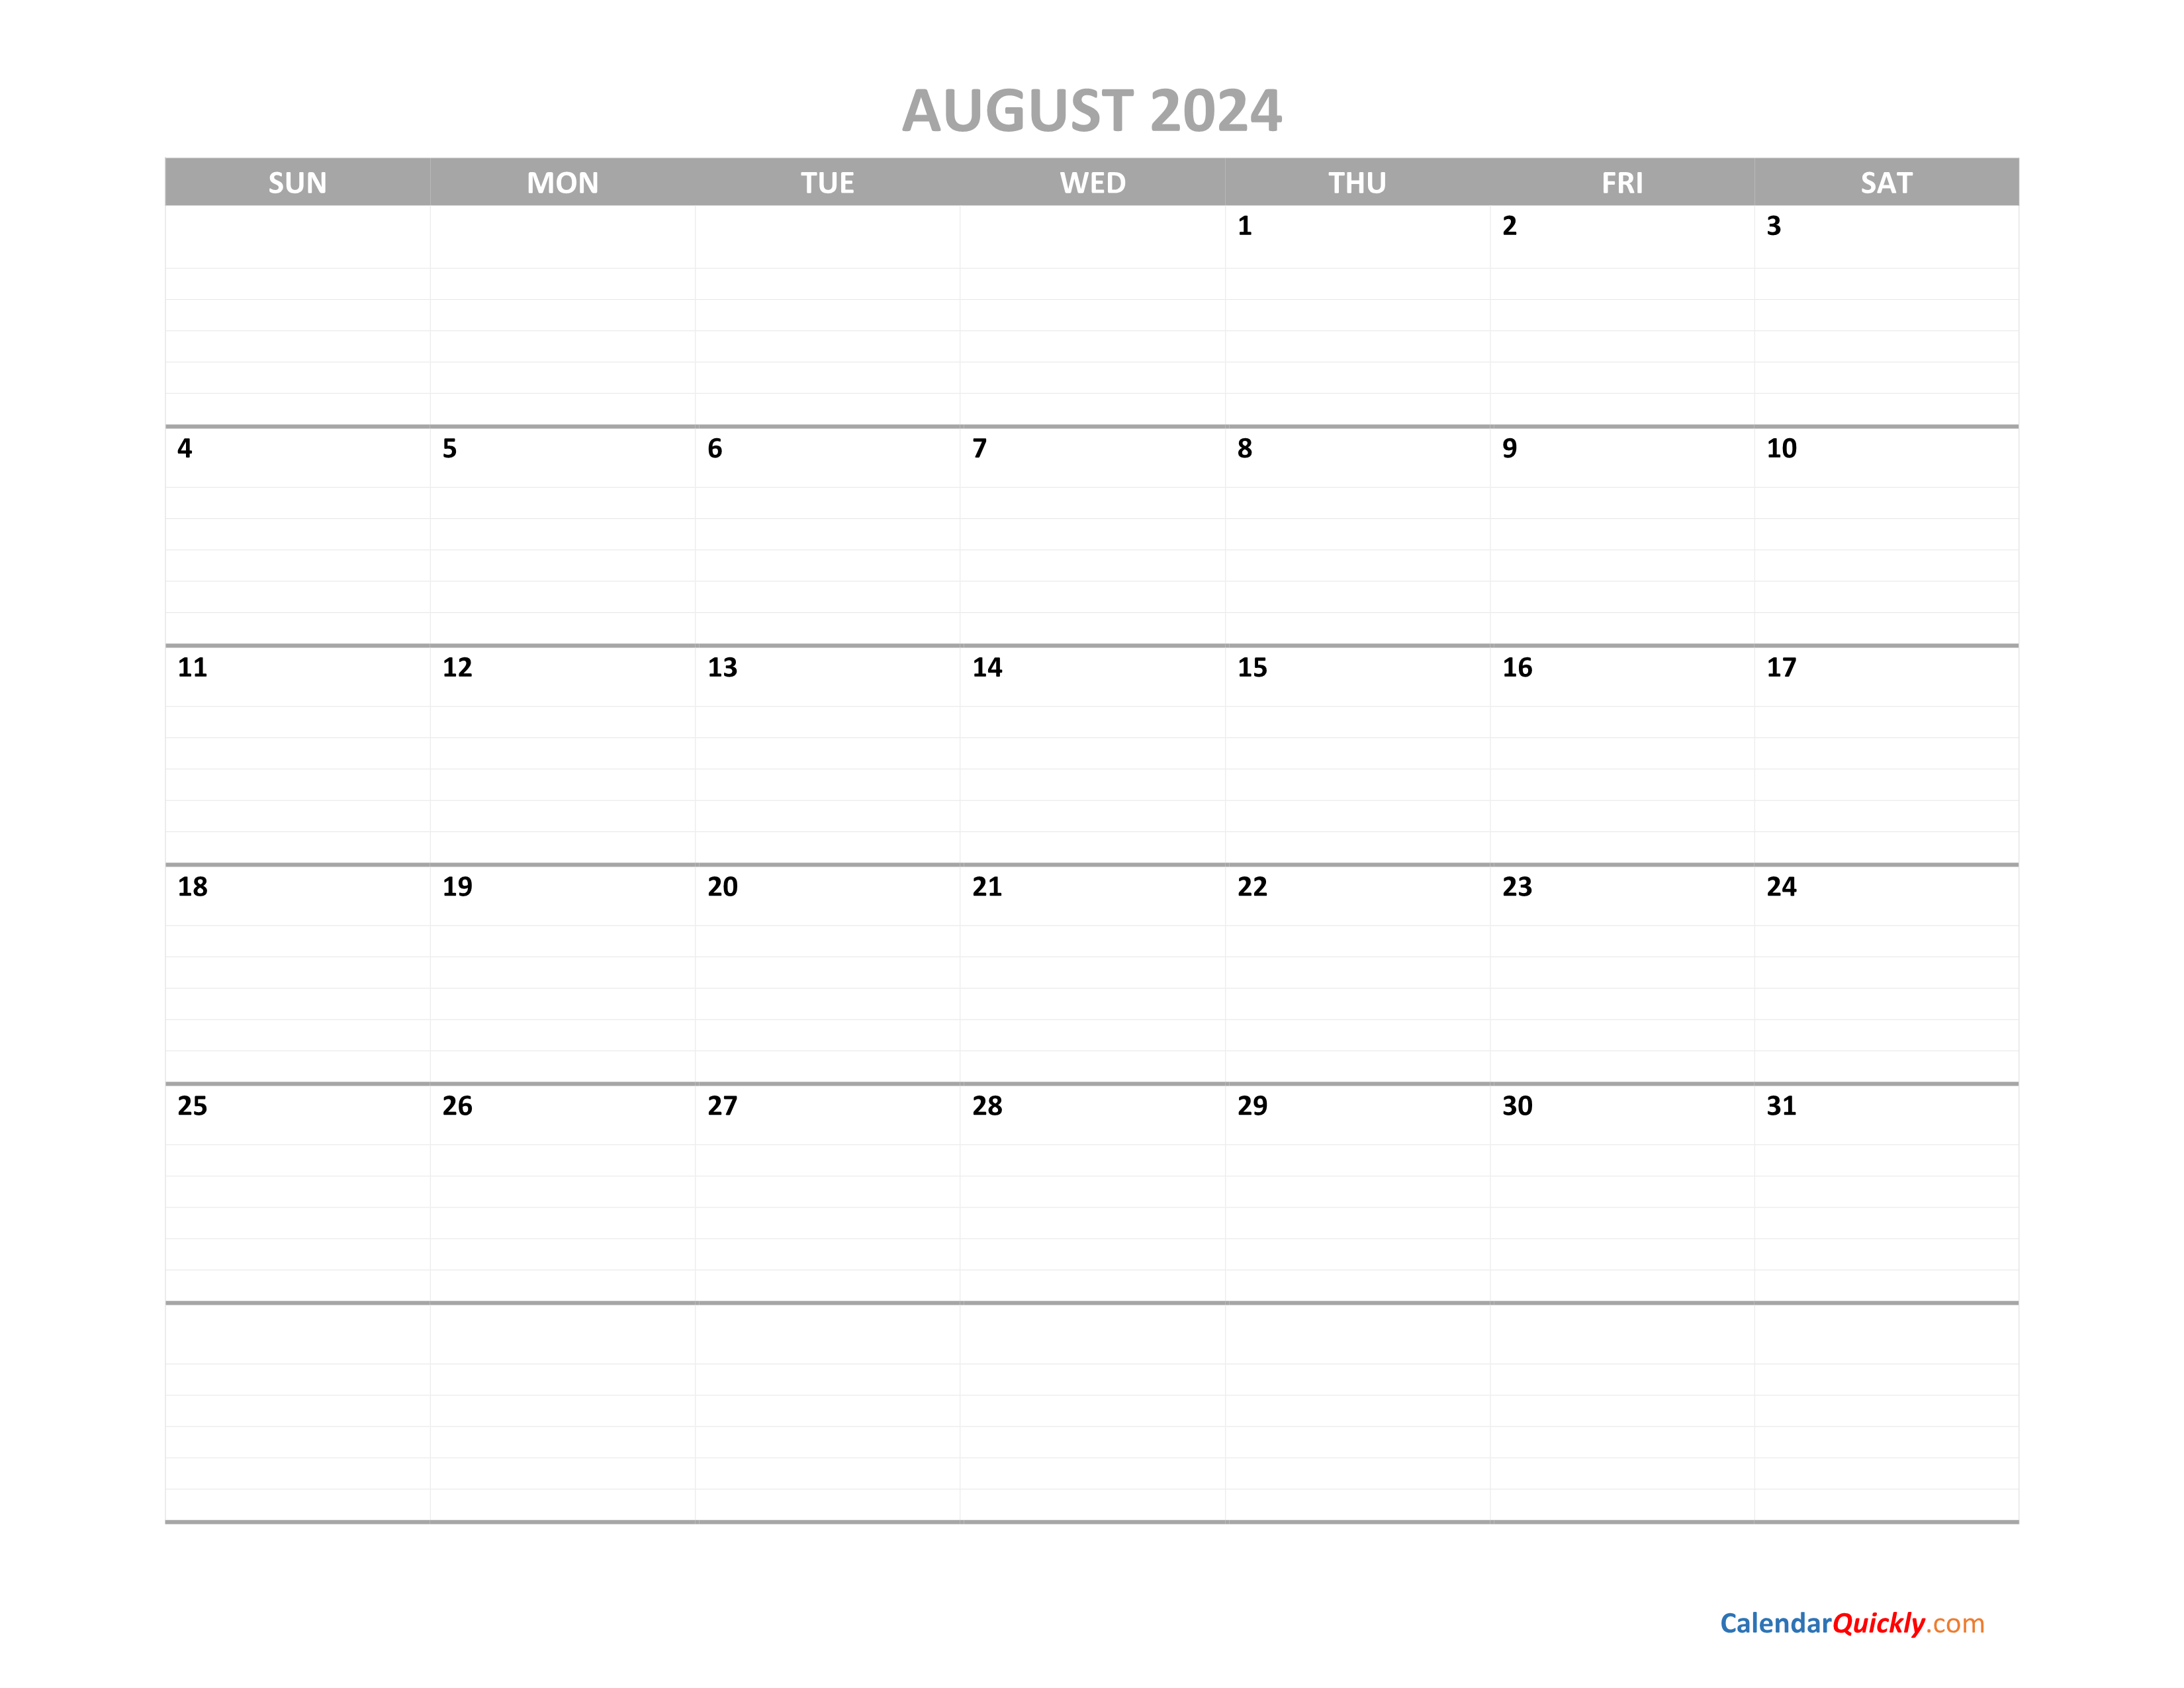 August Calendar 2024 Printable Calendar Quickly